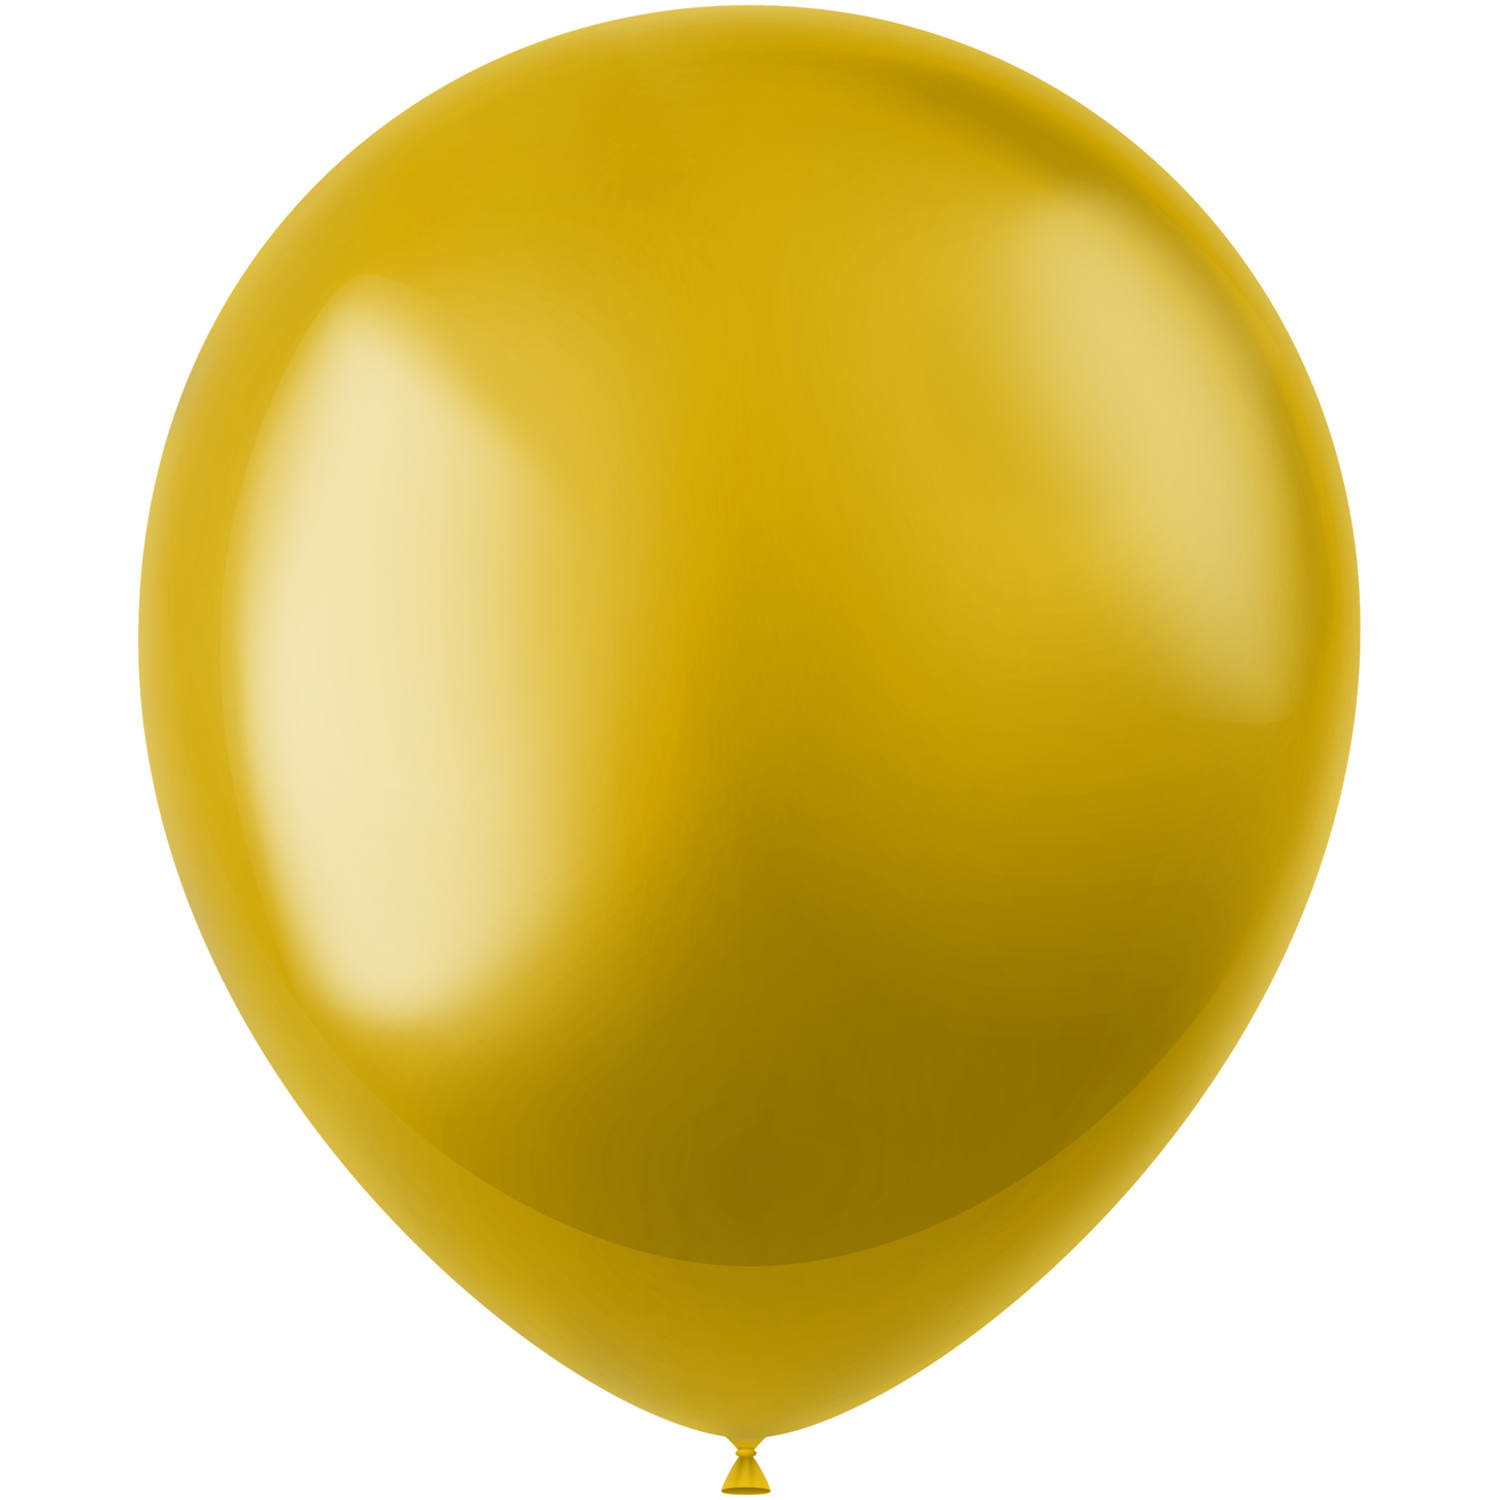 Madeliefje zal ik doen Prelude Gouden Ballonnen bestellen - Partywinkel